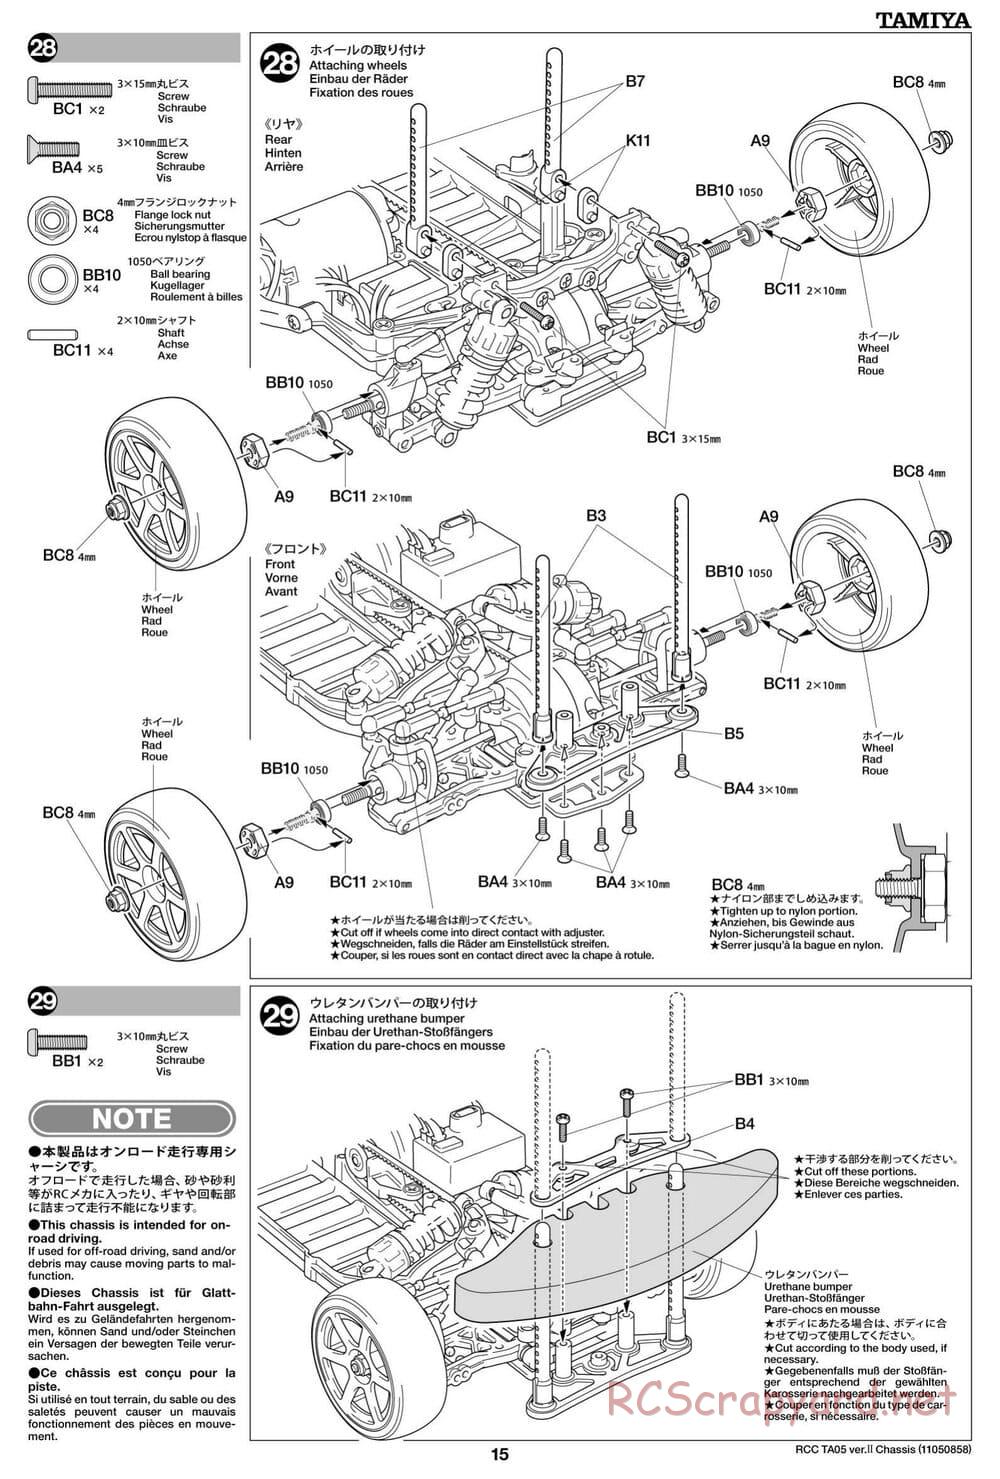 Tamiya - TA05 Ver.II Chassis - Manual - Page 15